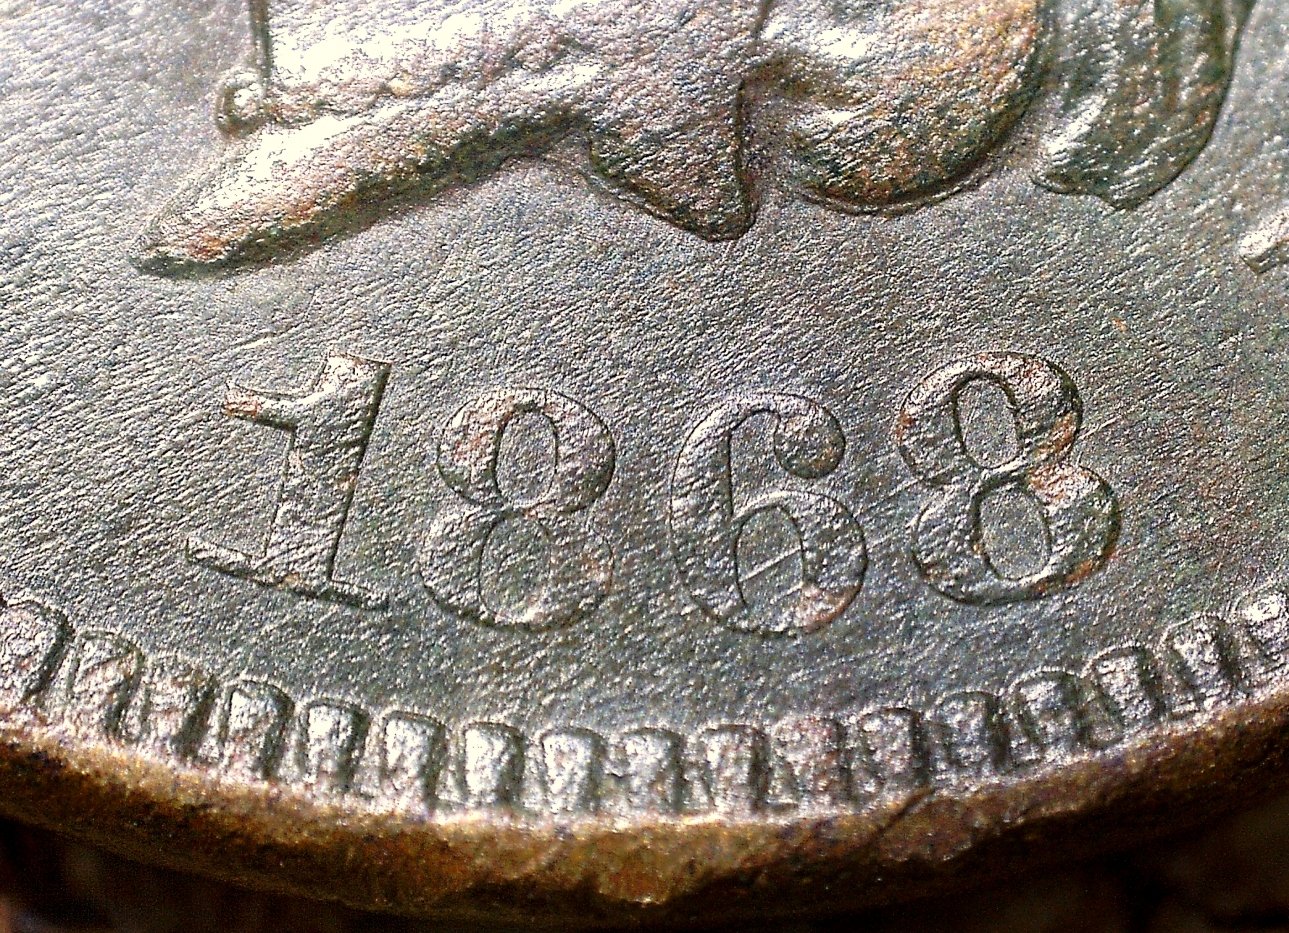 1868 RPD-004 - Indian Head Penny - Photo by David Killough